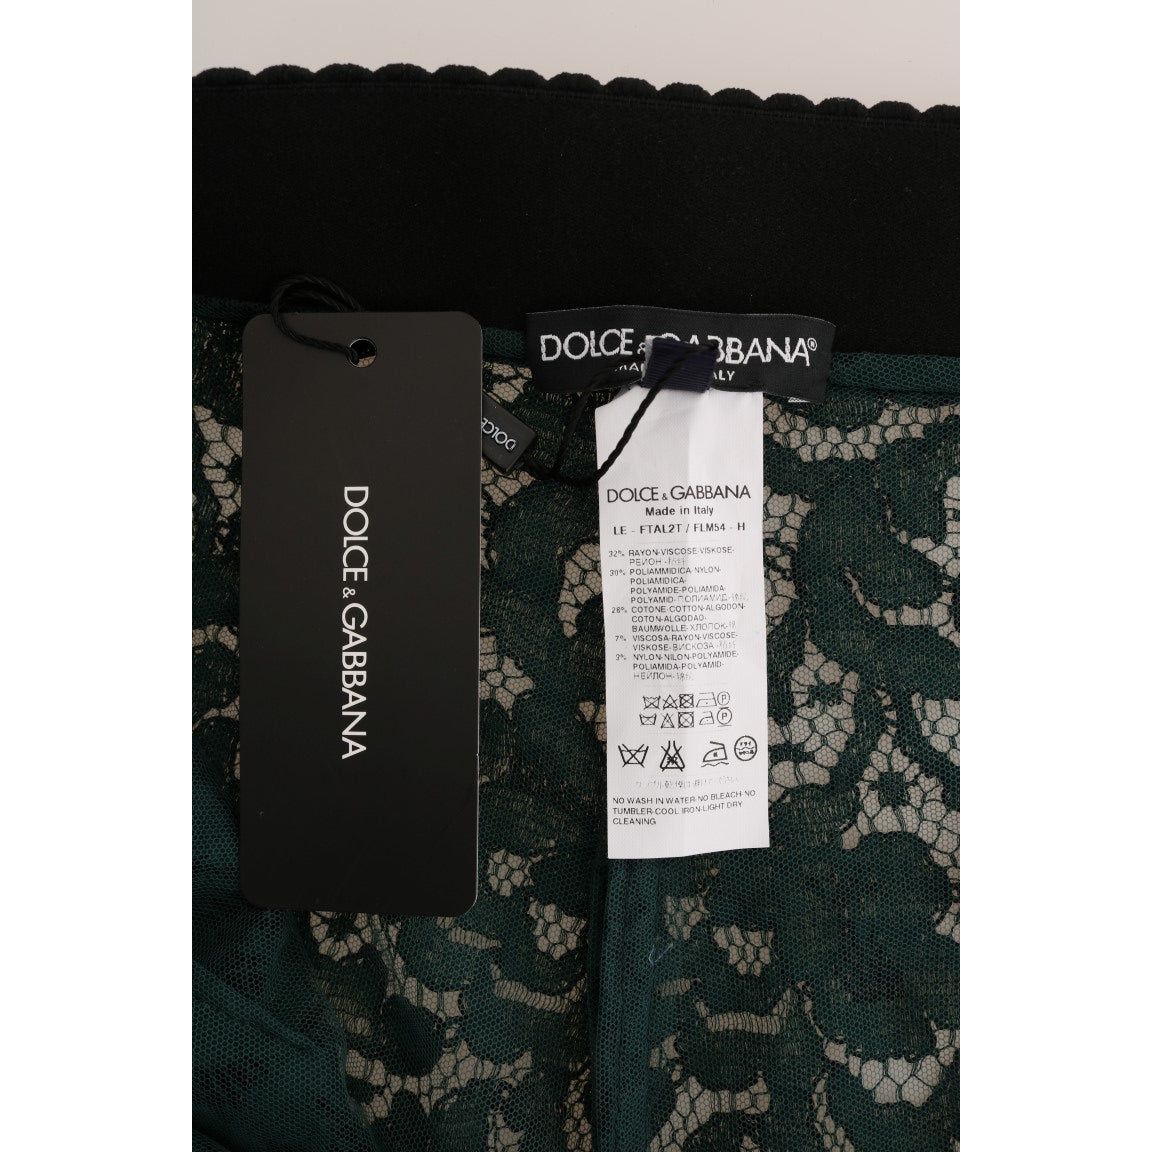 Dolce & Gabbana High Waist Floral Lace Slim Trousers green-floral-lace-leggings-pants 479205-green-floral-lace-leggings-pants-4.jpg